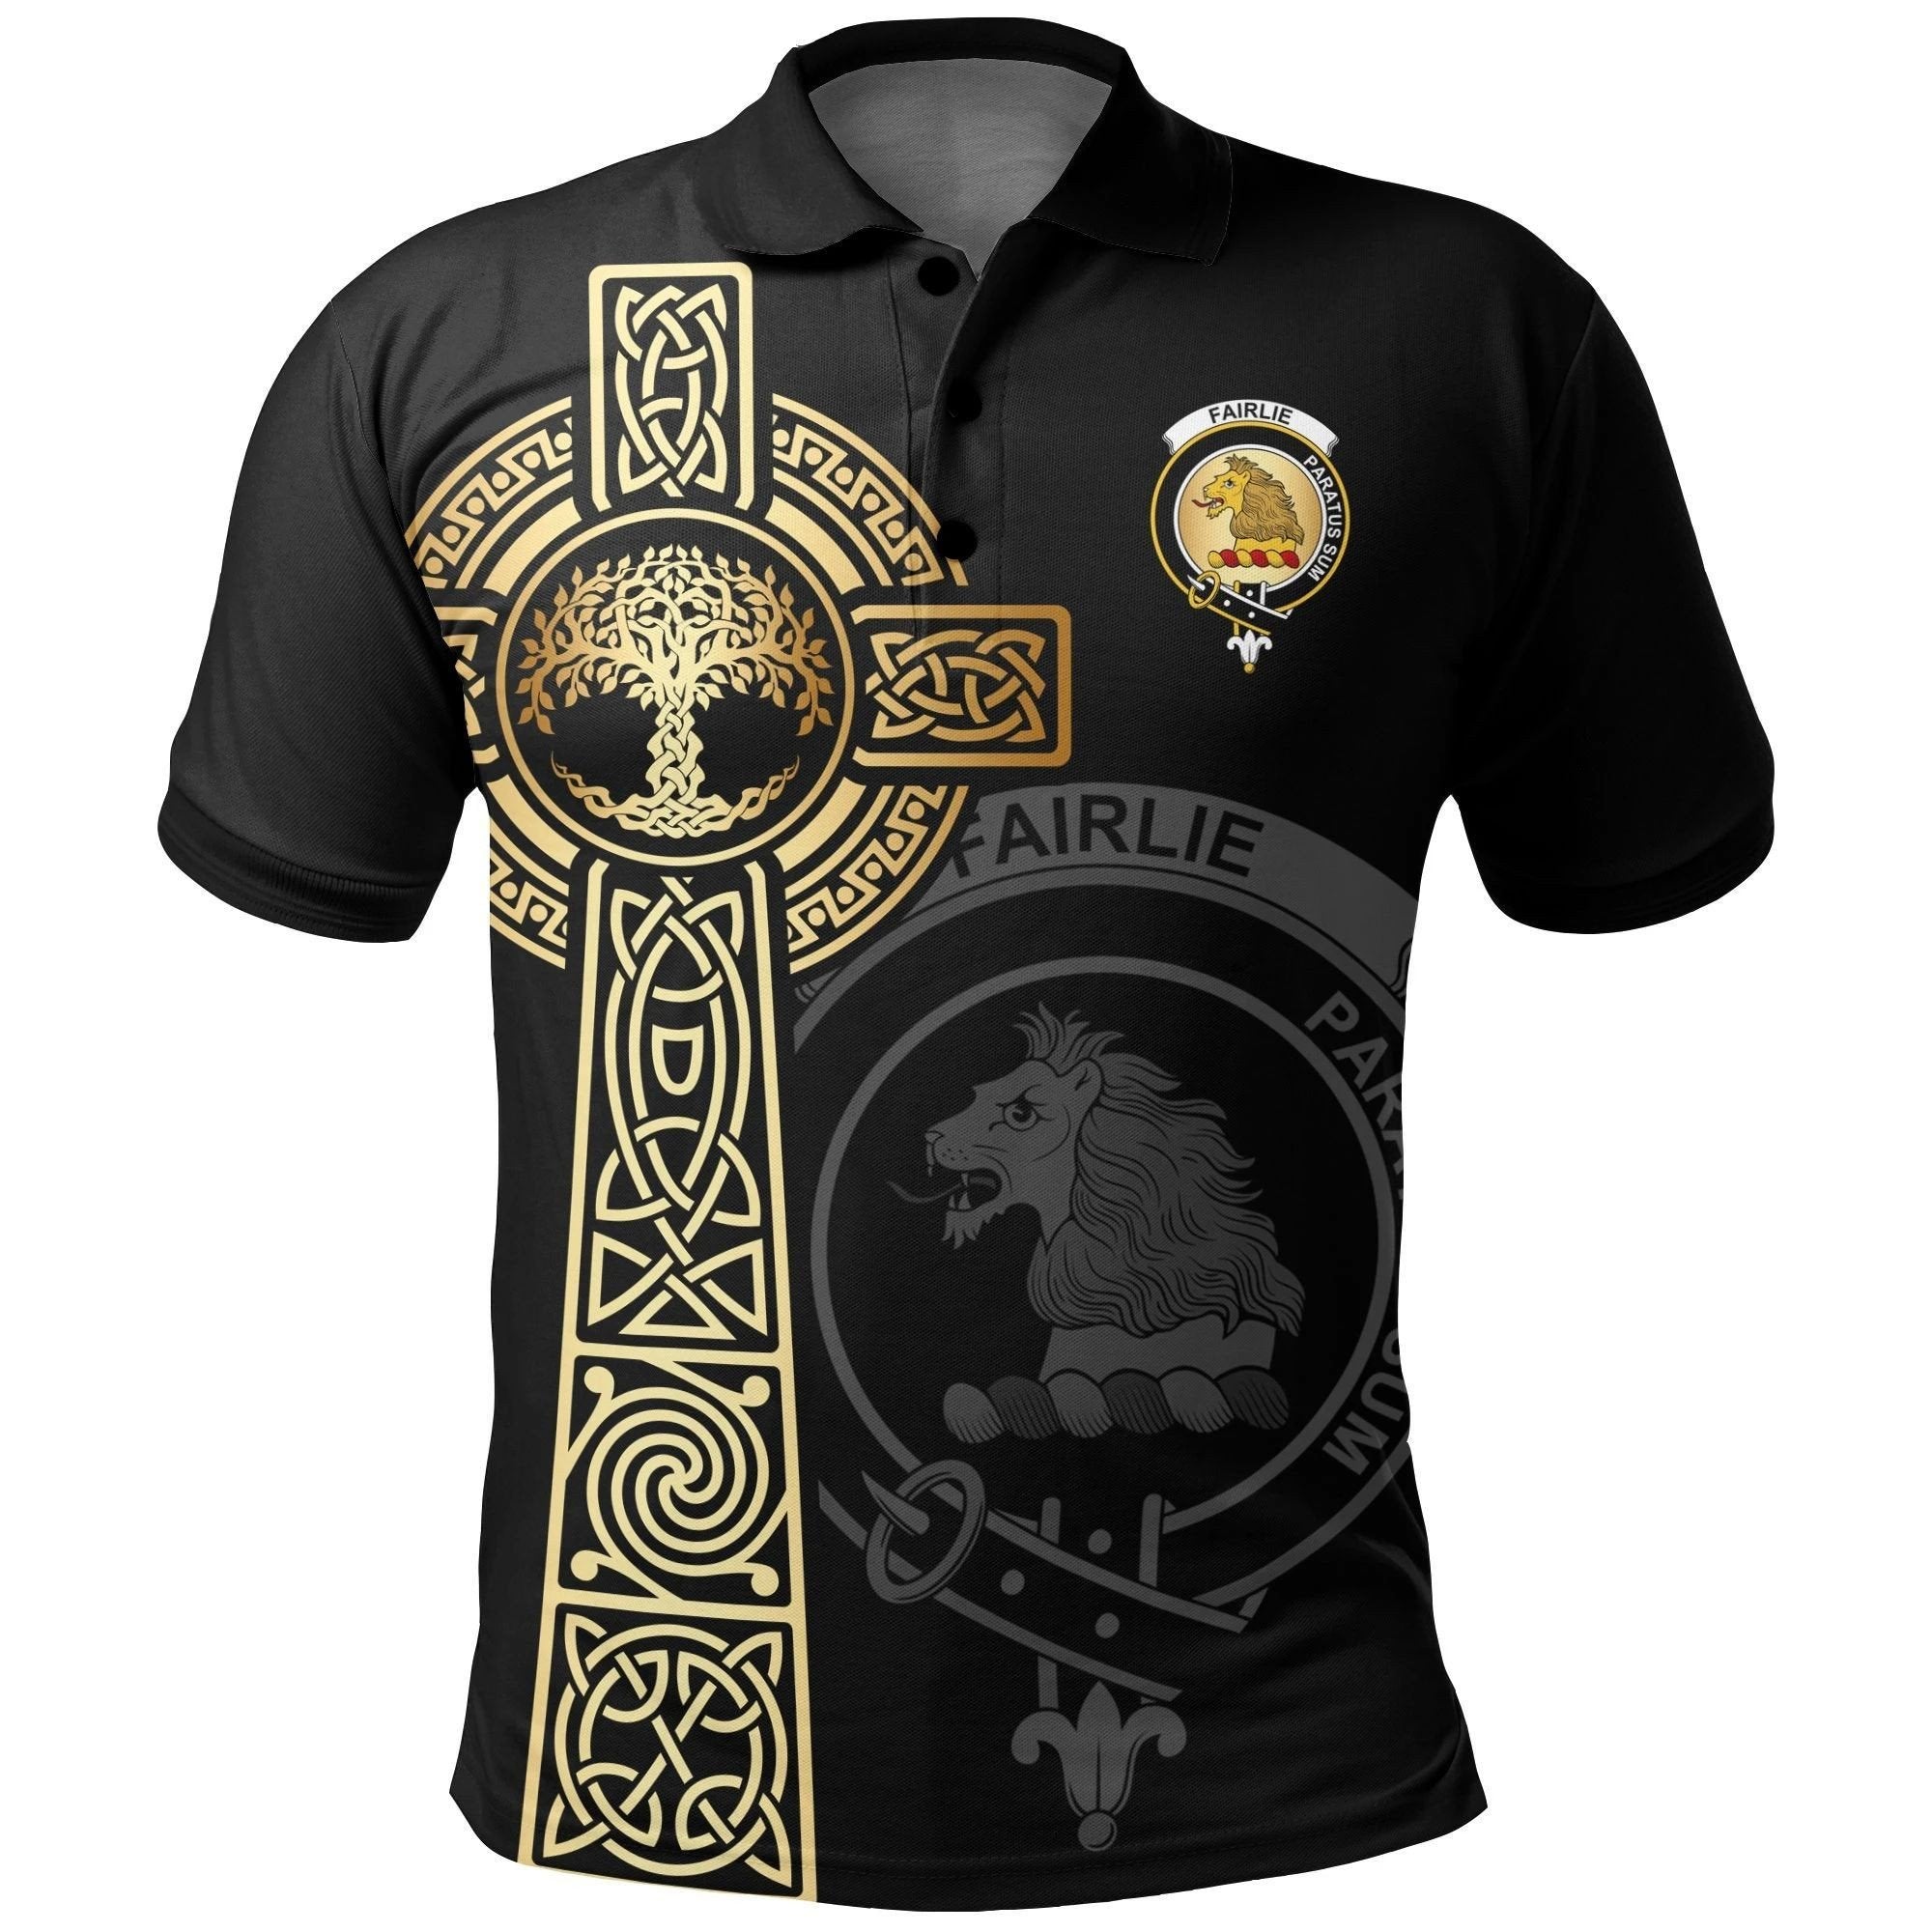 Fairlie Clan Polo Shirt, Scottish Tartan Fairlie Clans Polo Shirt Tree Of Life Style